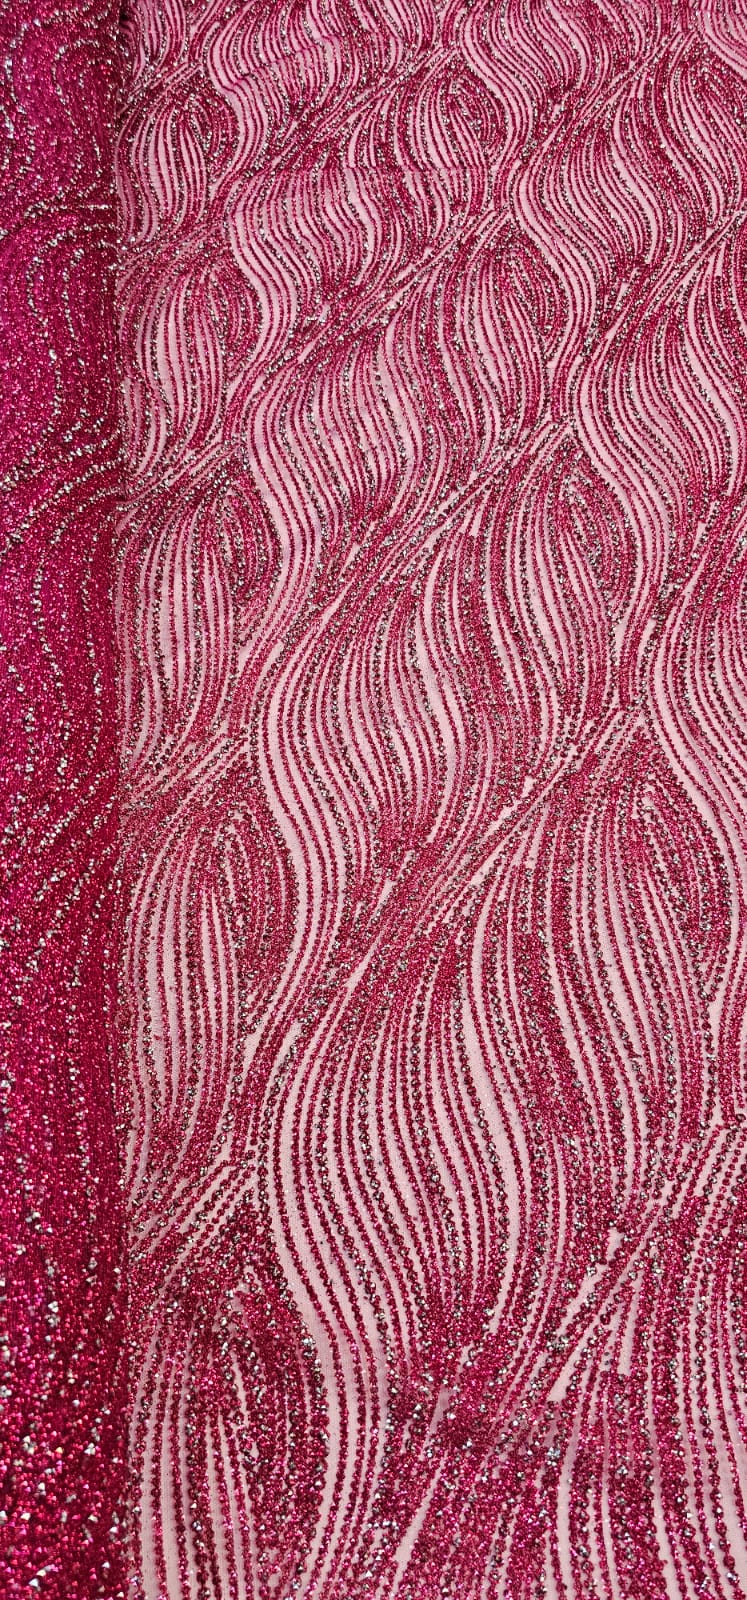 Tule com Glitter Diamond Wave Pink - Largura 1,45 m x Comprimento  1 m